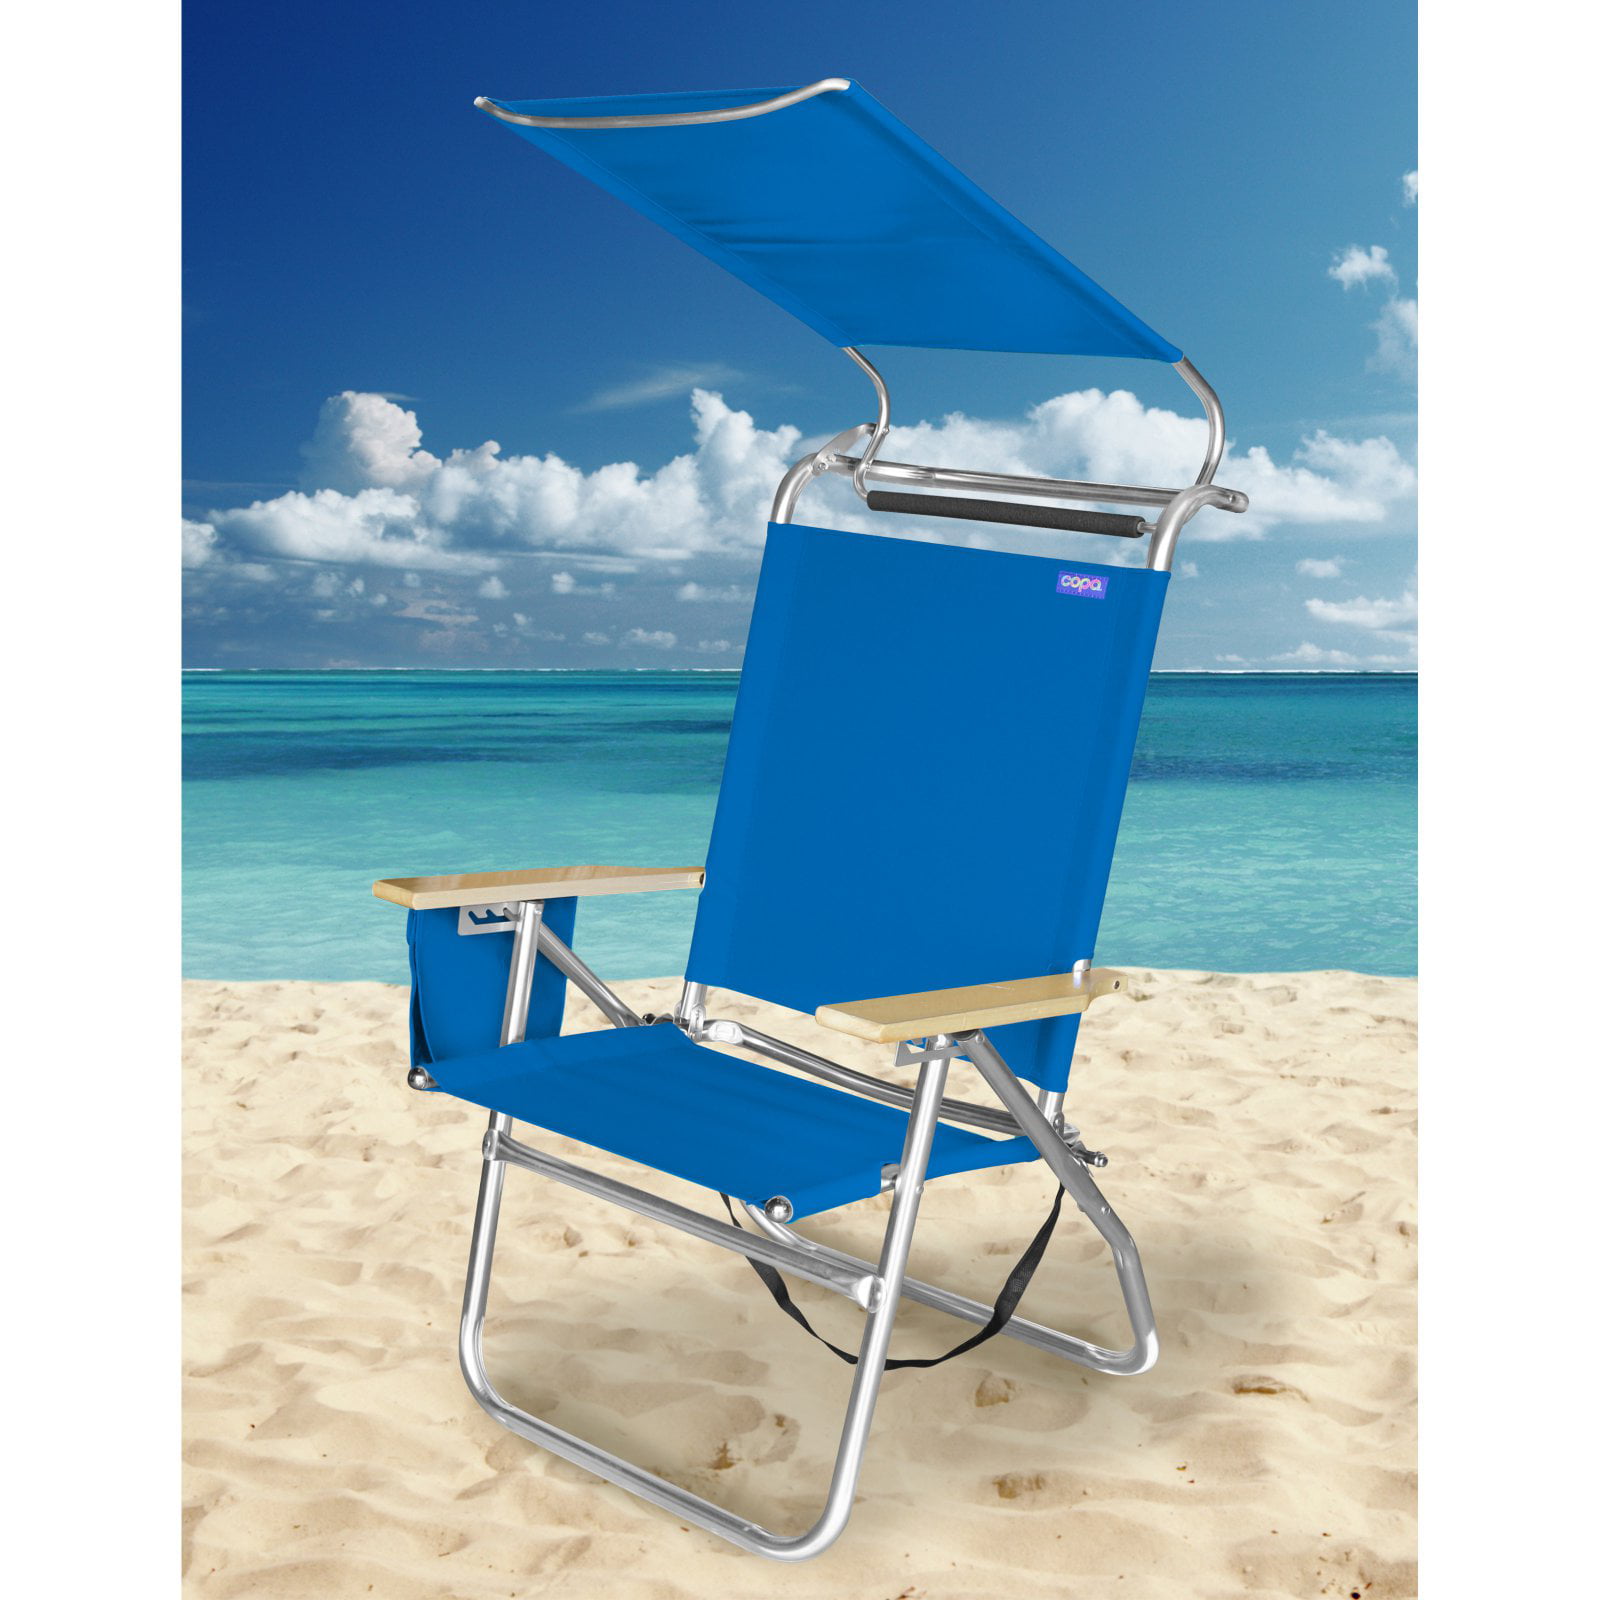 Unique Copa Beach Chair Price for Small Space